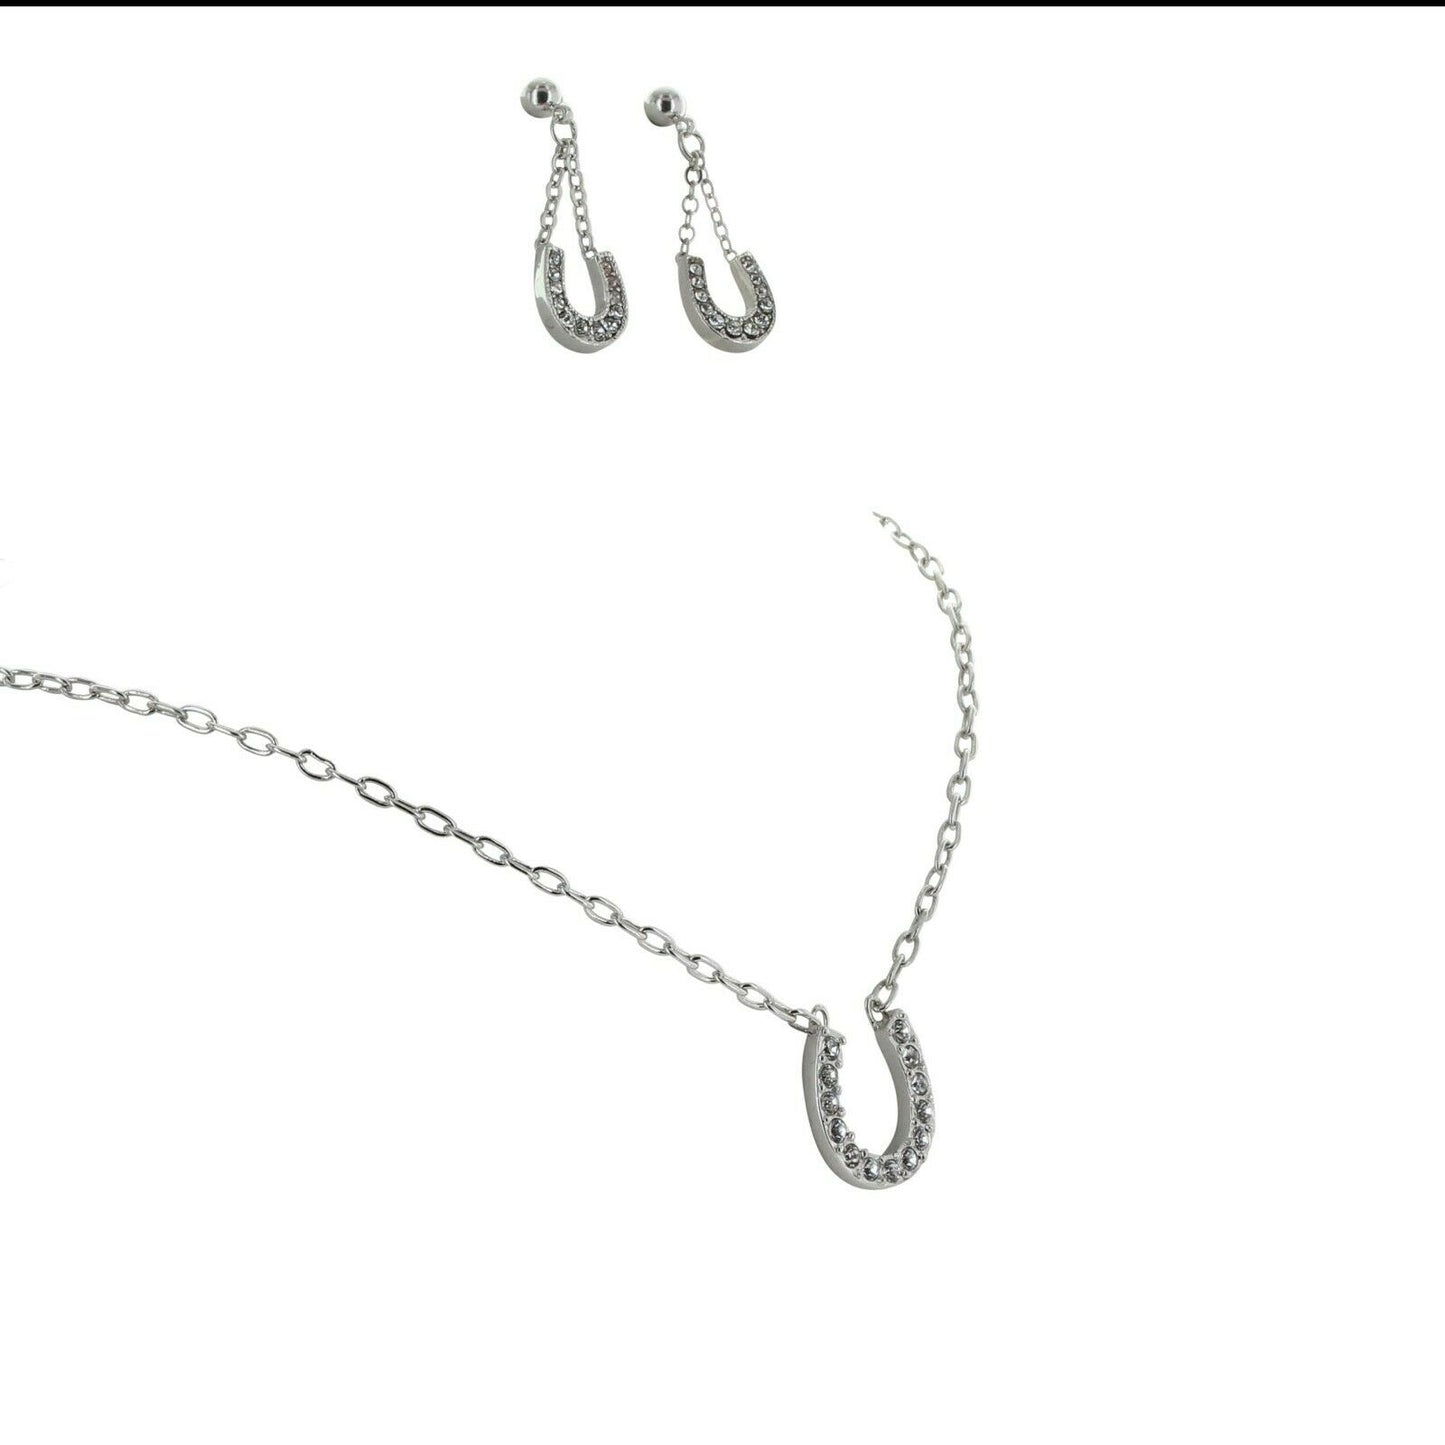 Montana Silversmiths Crystal Clear Lucky Horseshoe Jewelry Set JS808